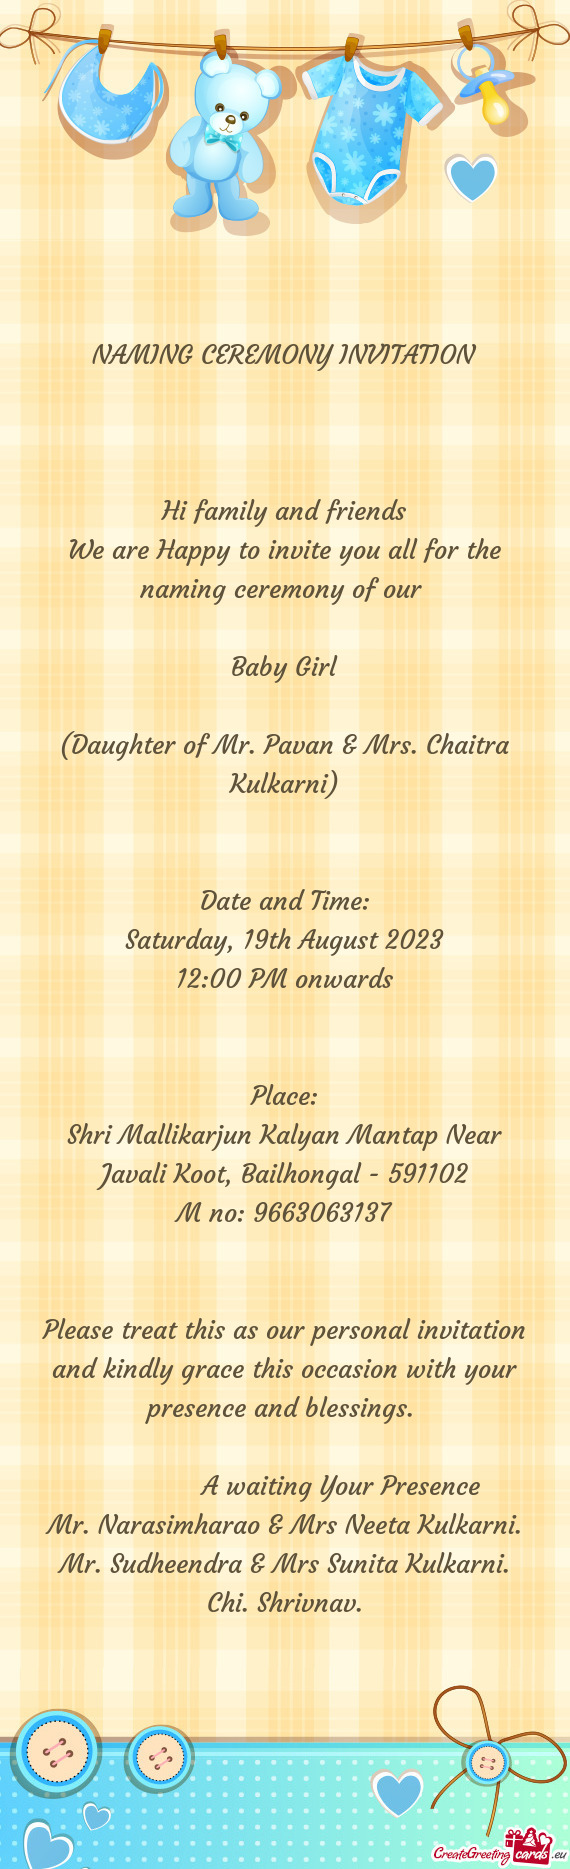 (Daughter of Mr. Pavan & Mrs. Chaitra Kulkarni)